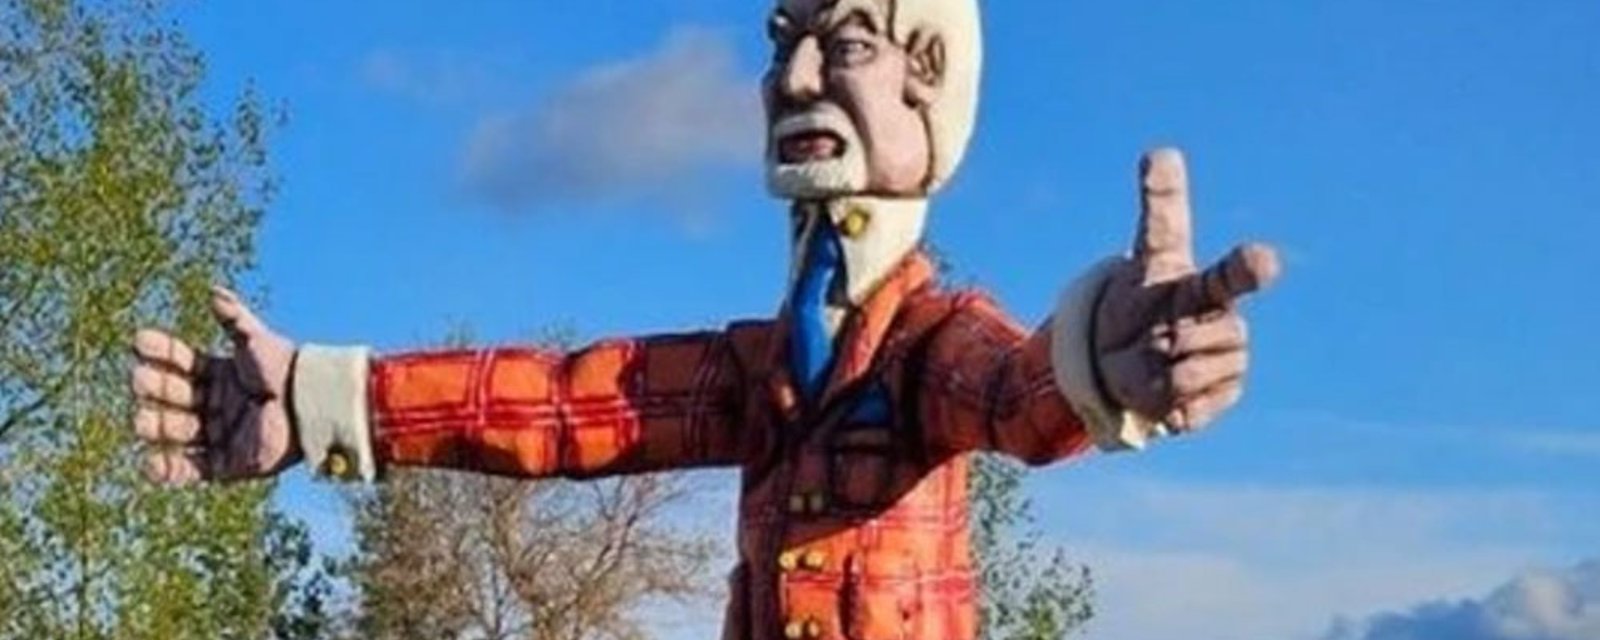 Saskatchewan town unveils 15 foot tall Don Cherry statue